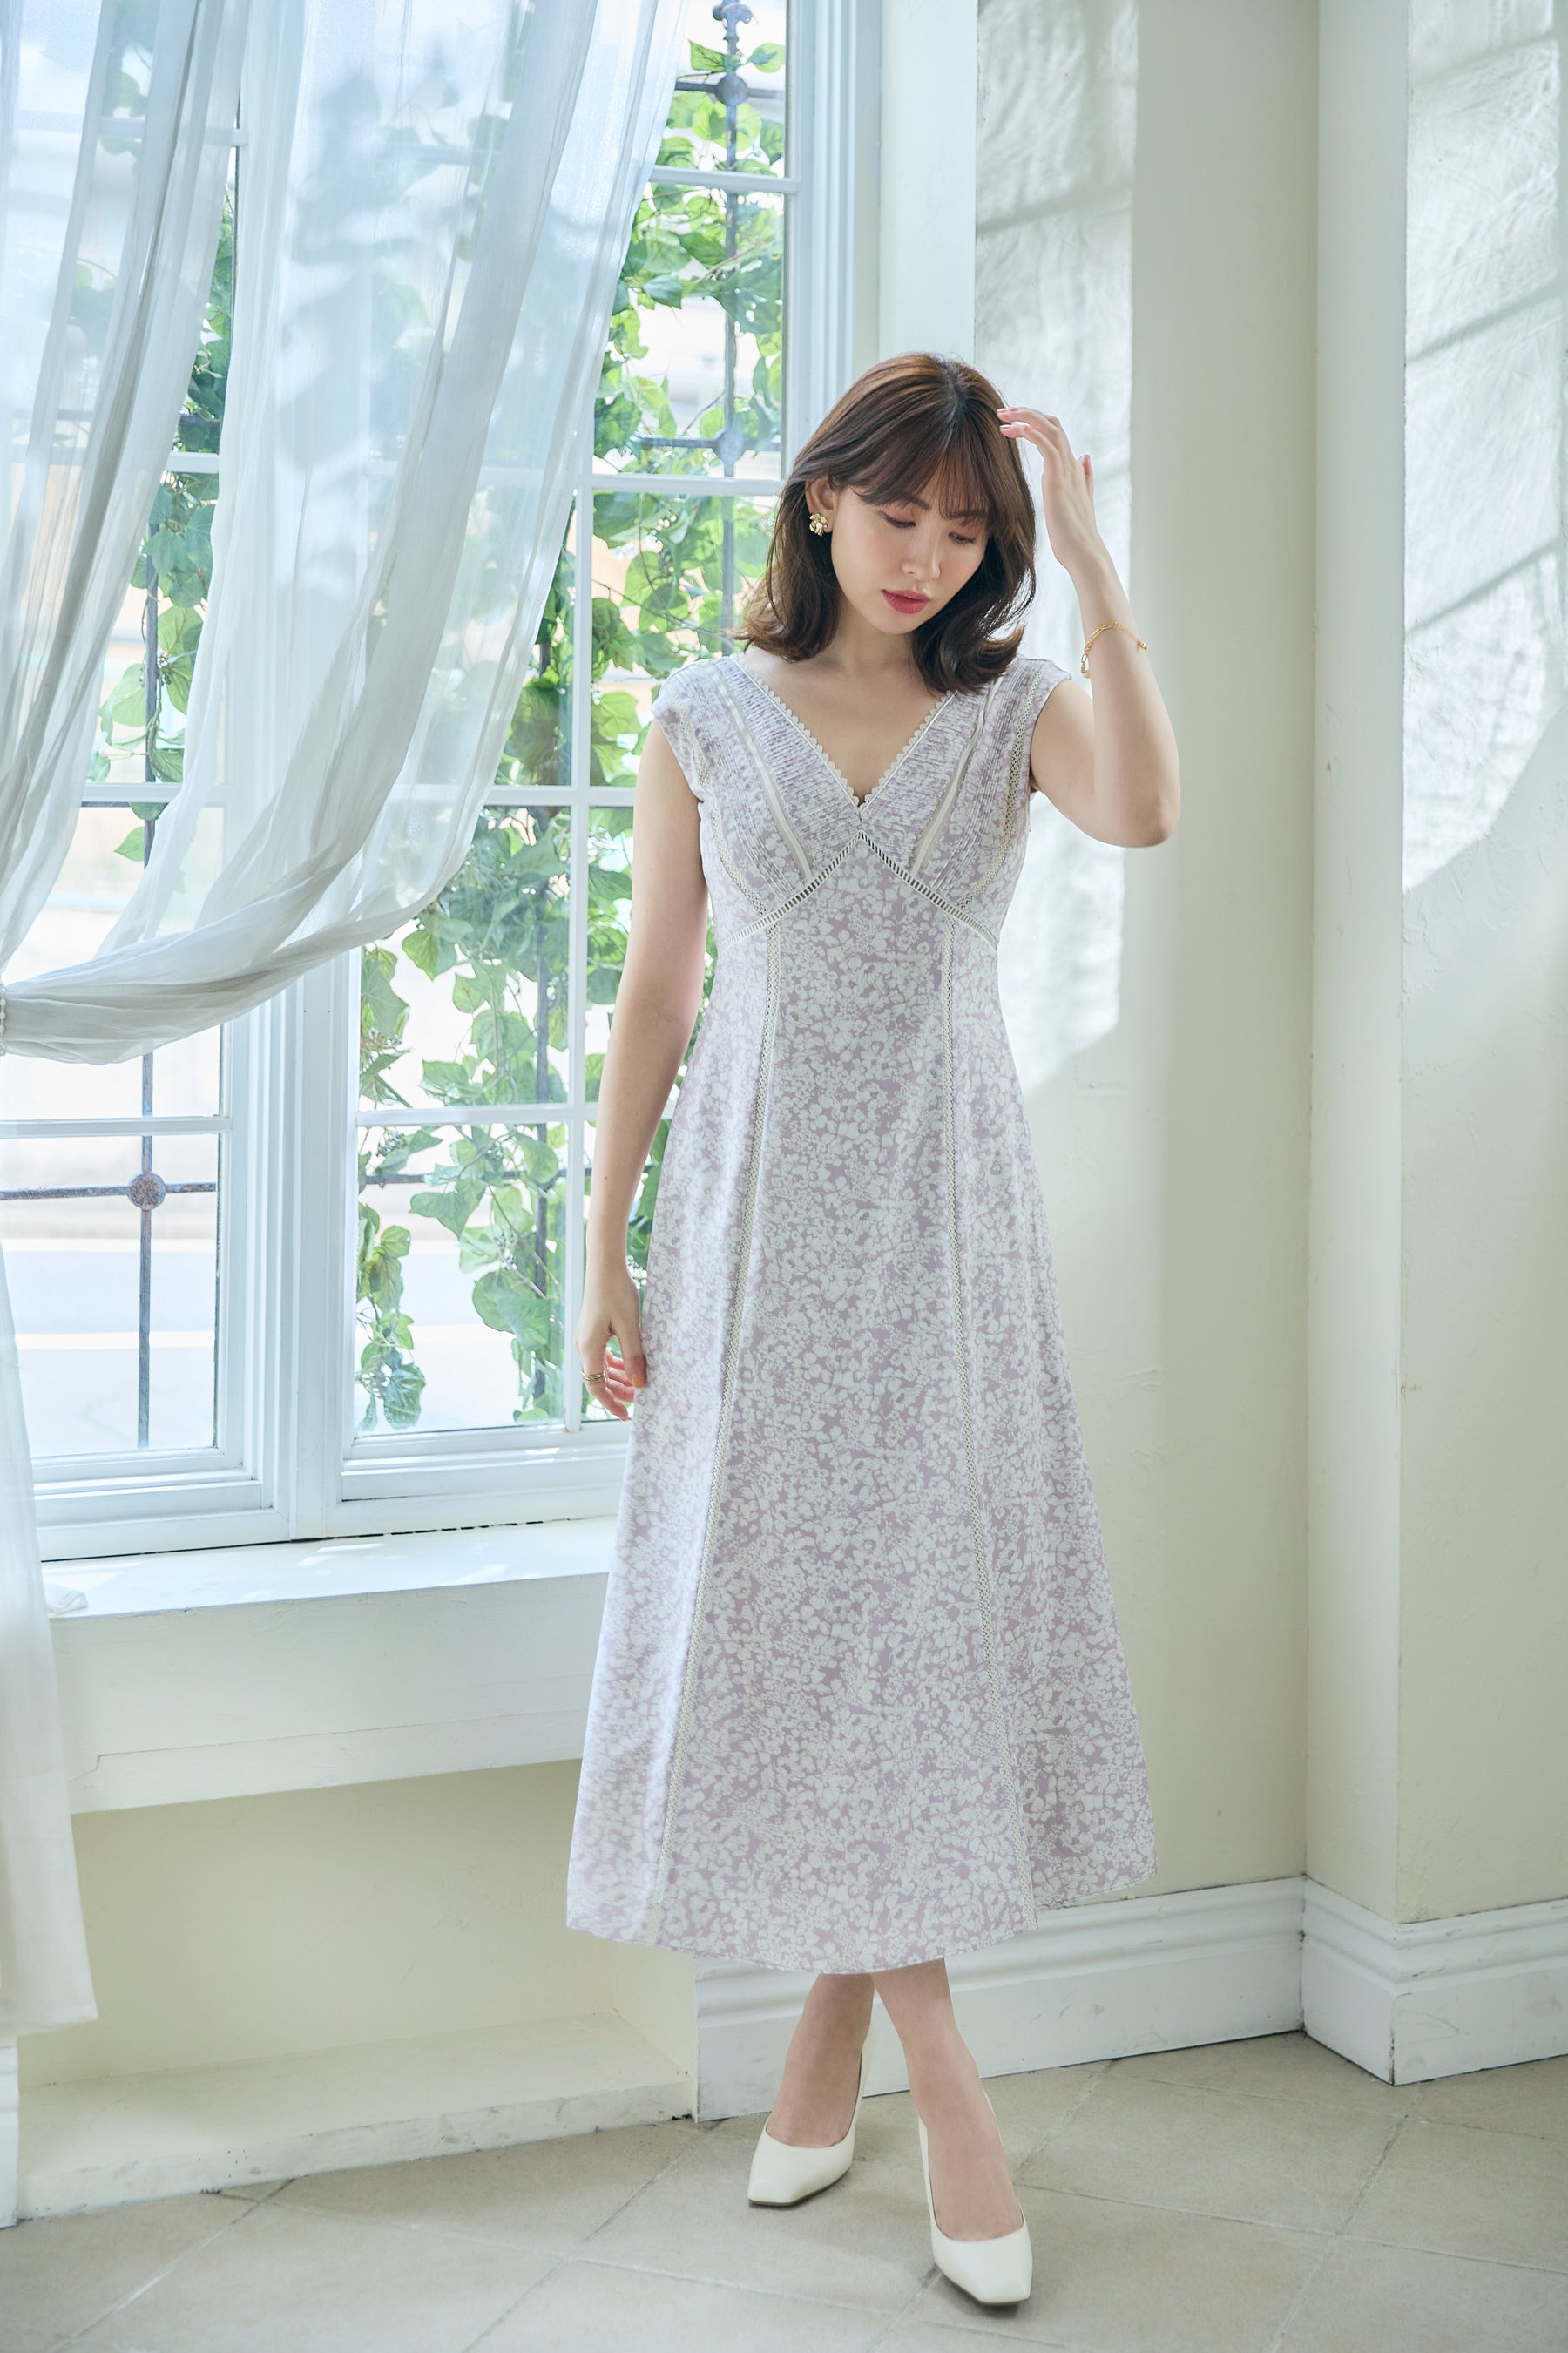 期間限定特価 herlipto Lace Trimmed floral Dress navy Ika5g